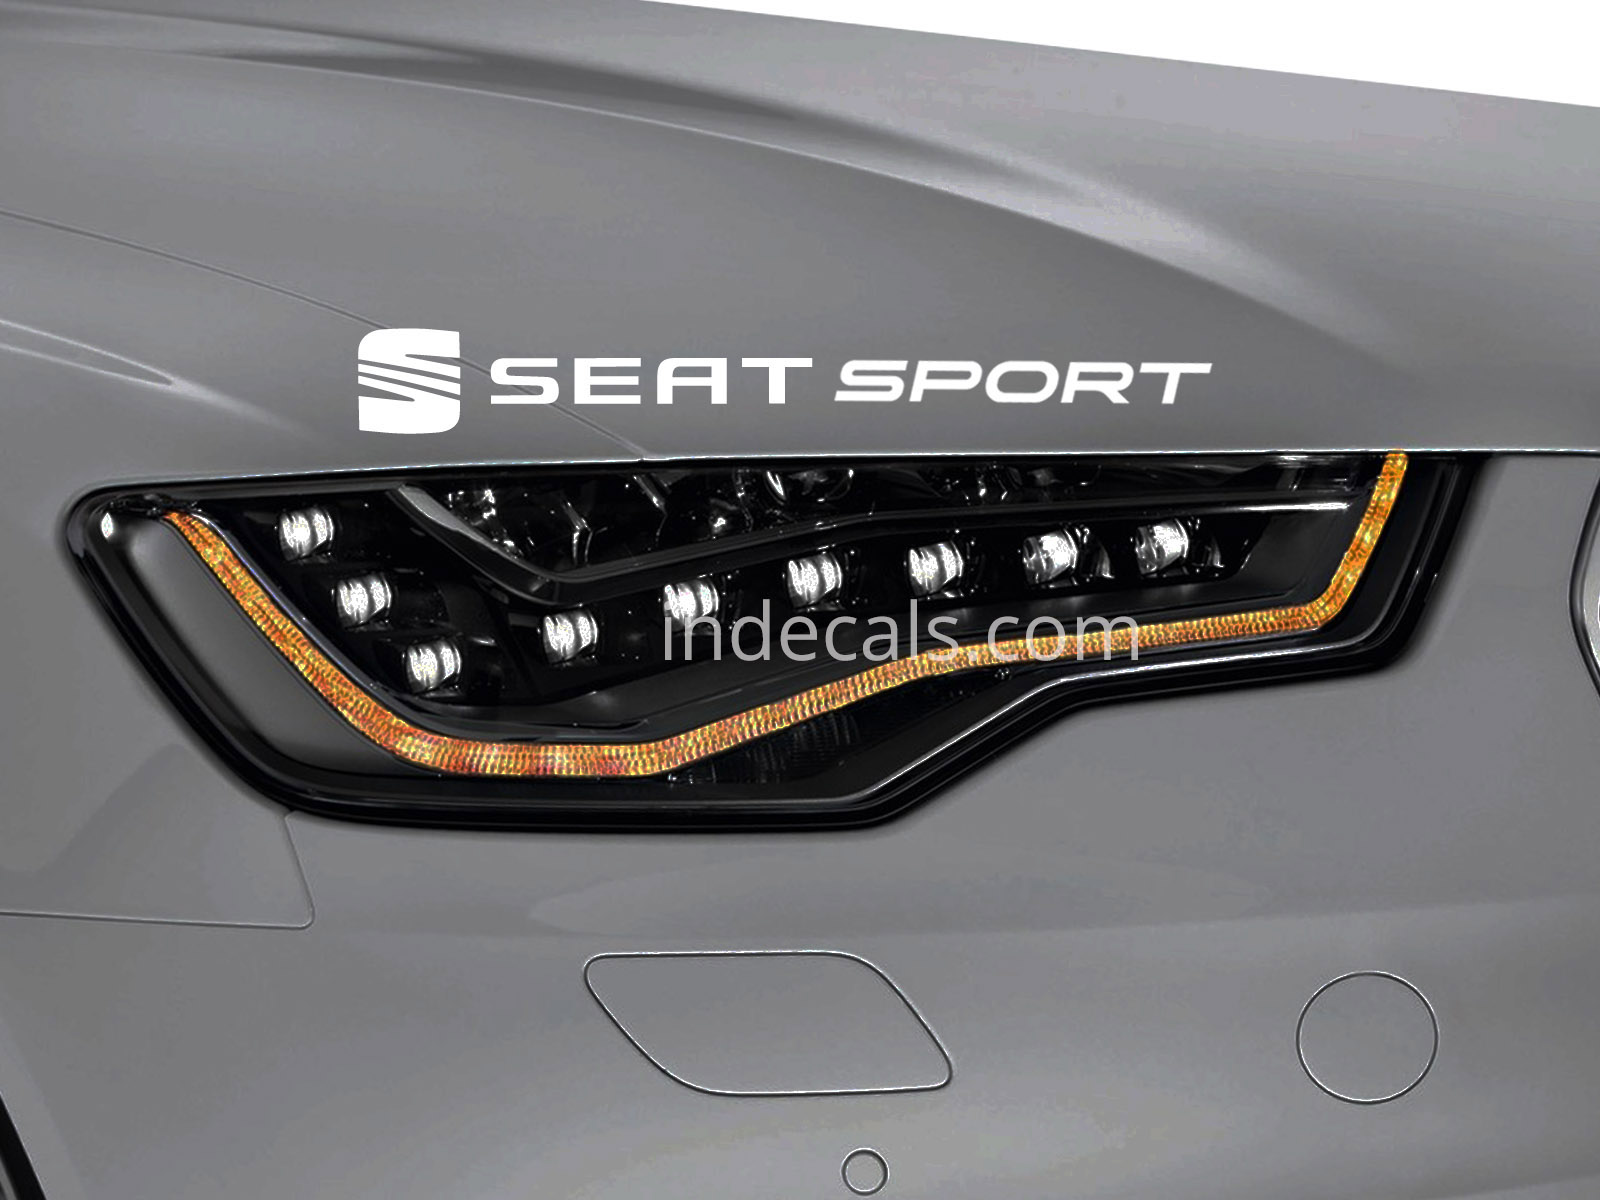 1 x Seat Sport Sticker for Eyebrow - White